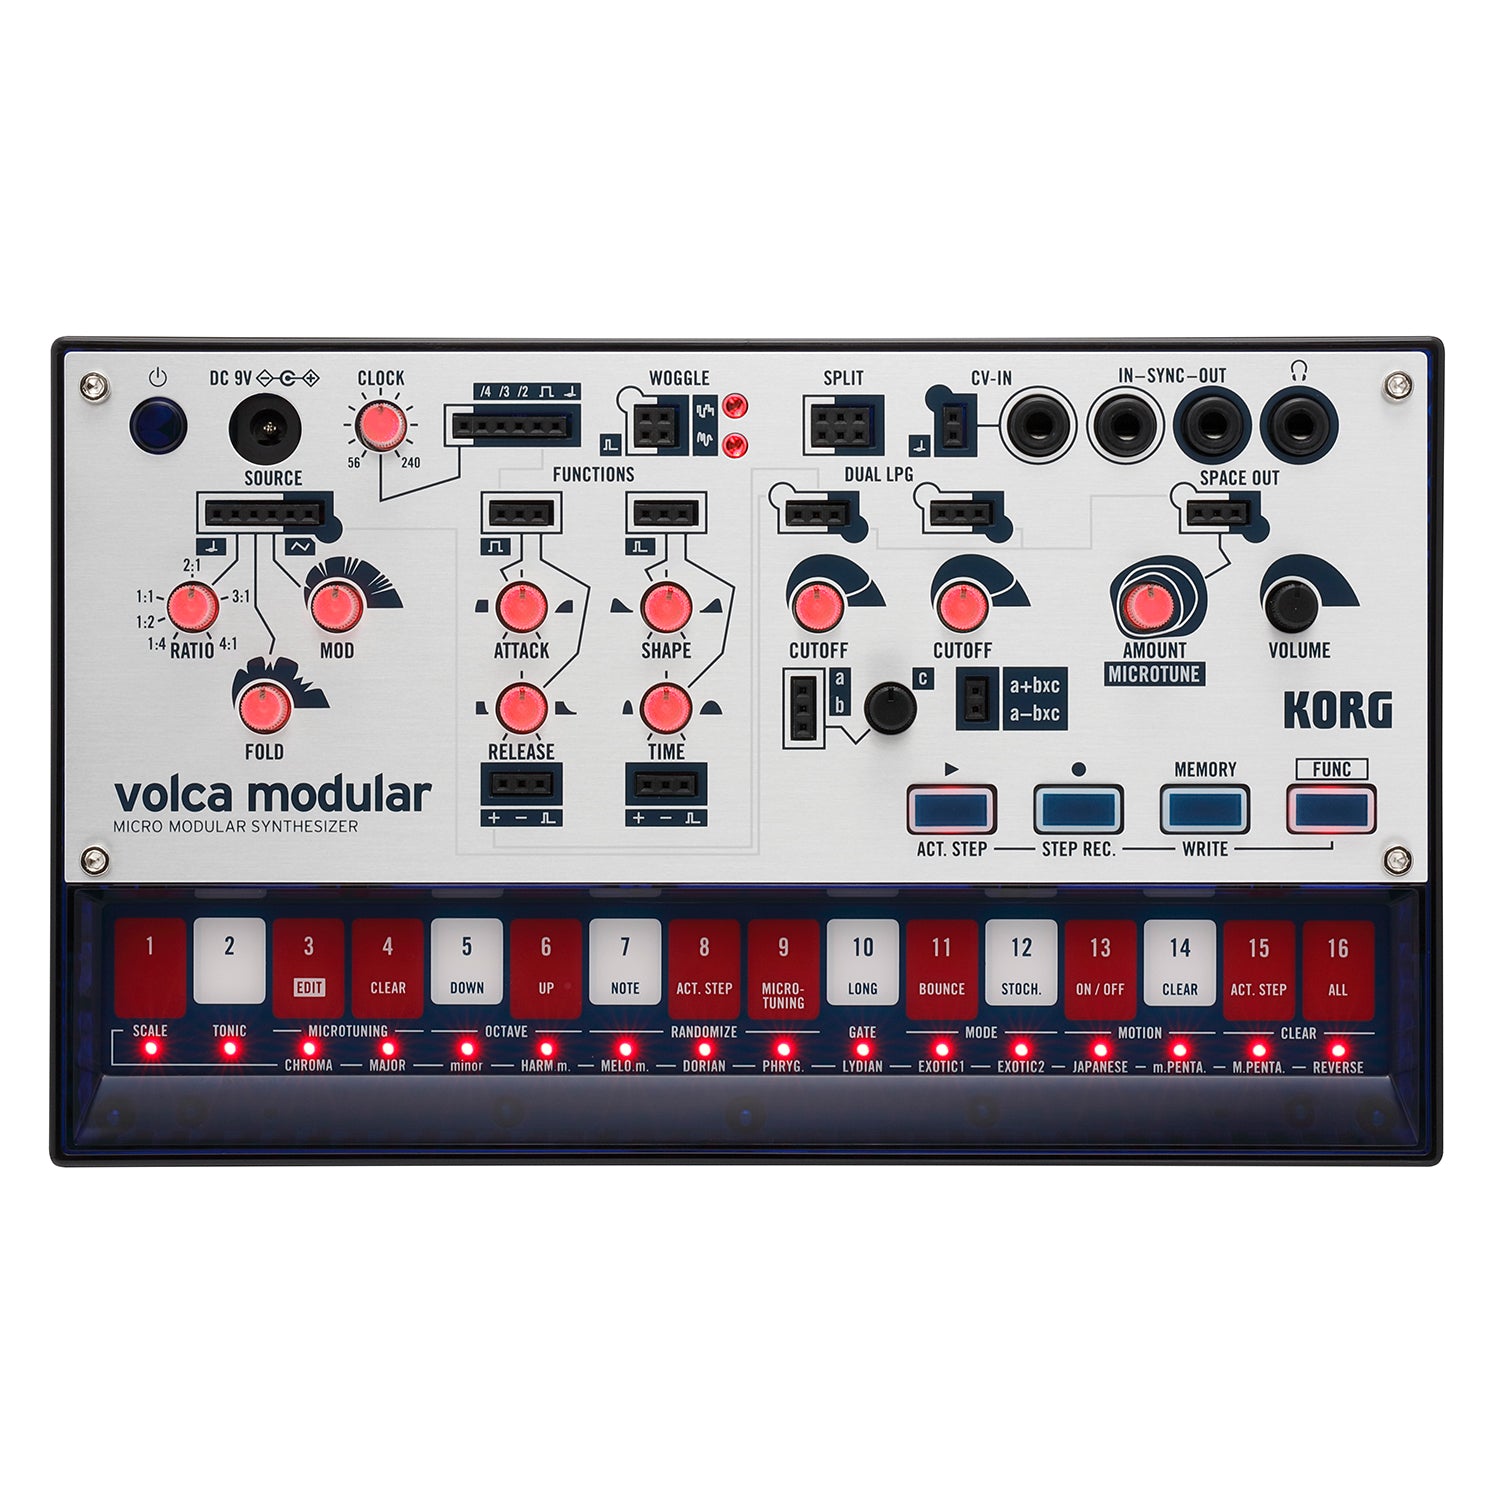 volca modular KORG USA Official Store